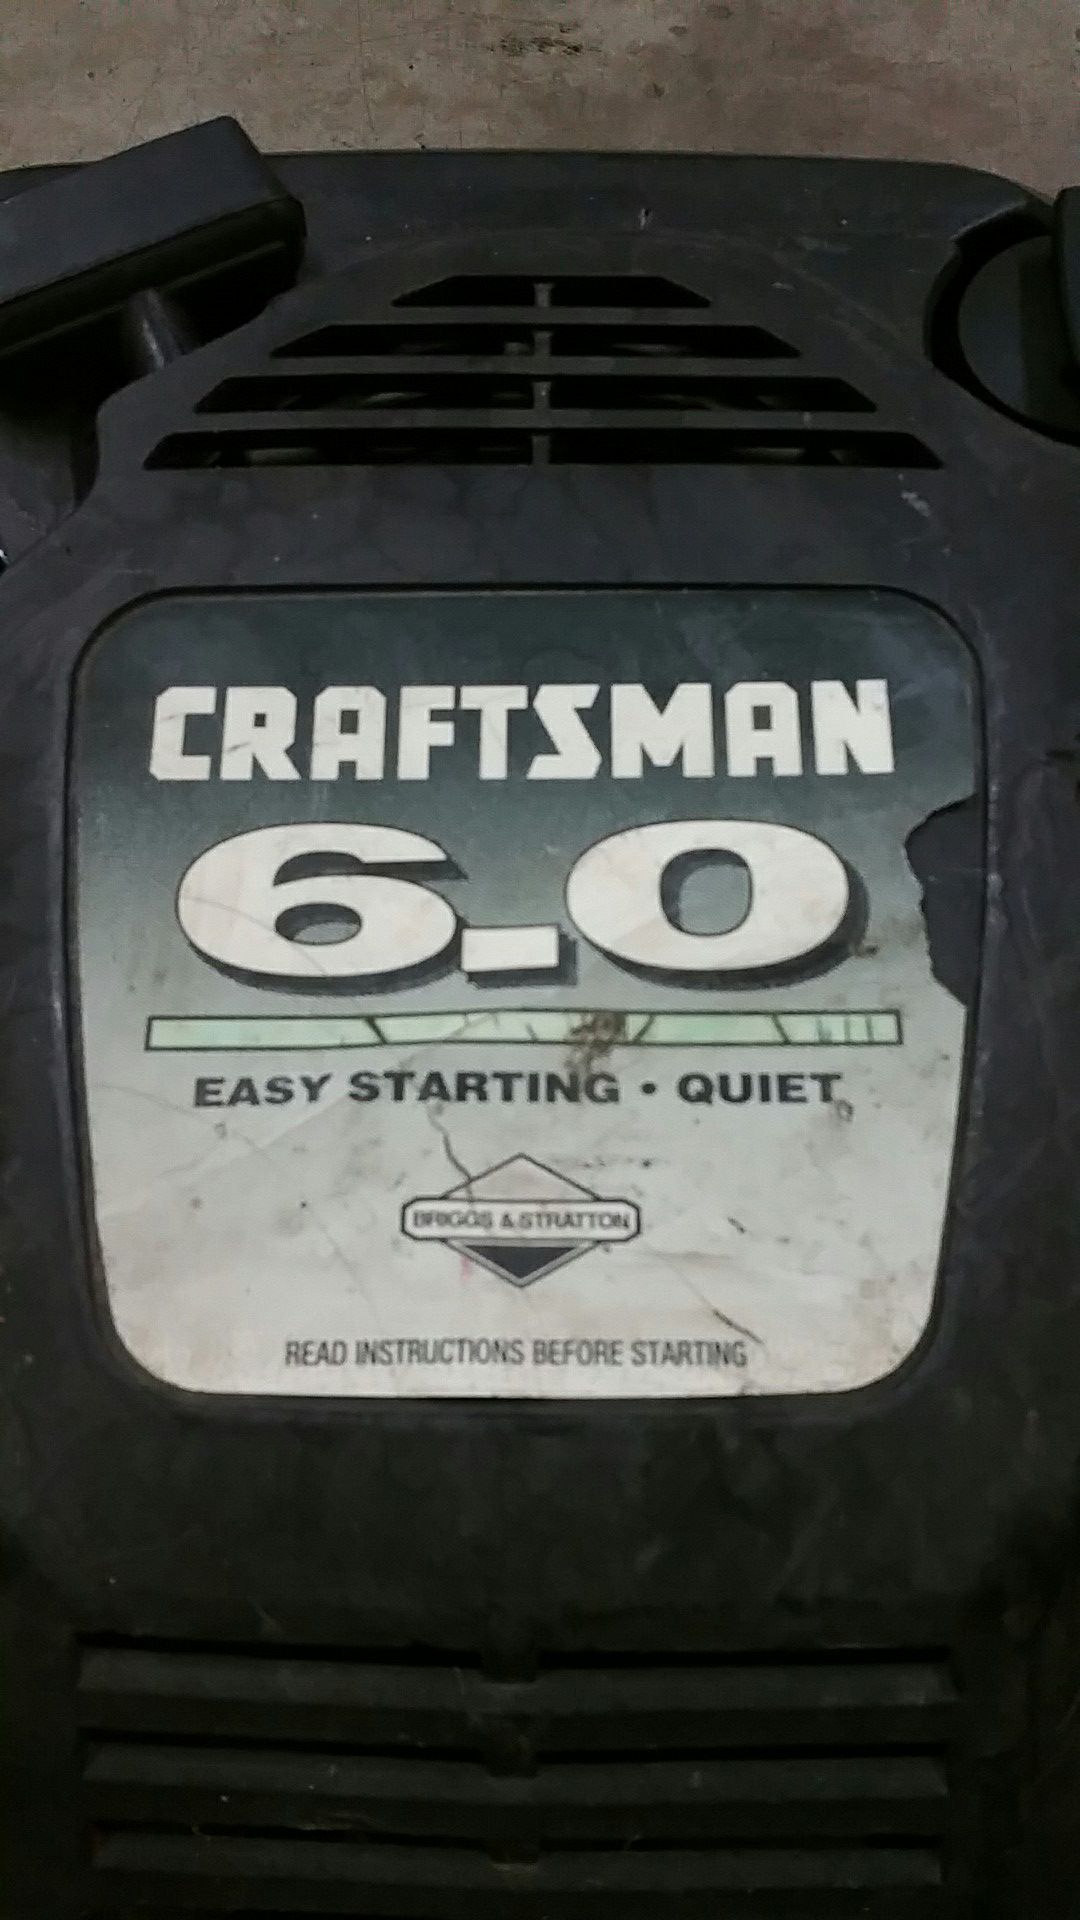 CRAFTSMAN LAWN MOWER. 6.0' BRIGGS & STRATTON ENGINE. USED'